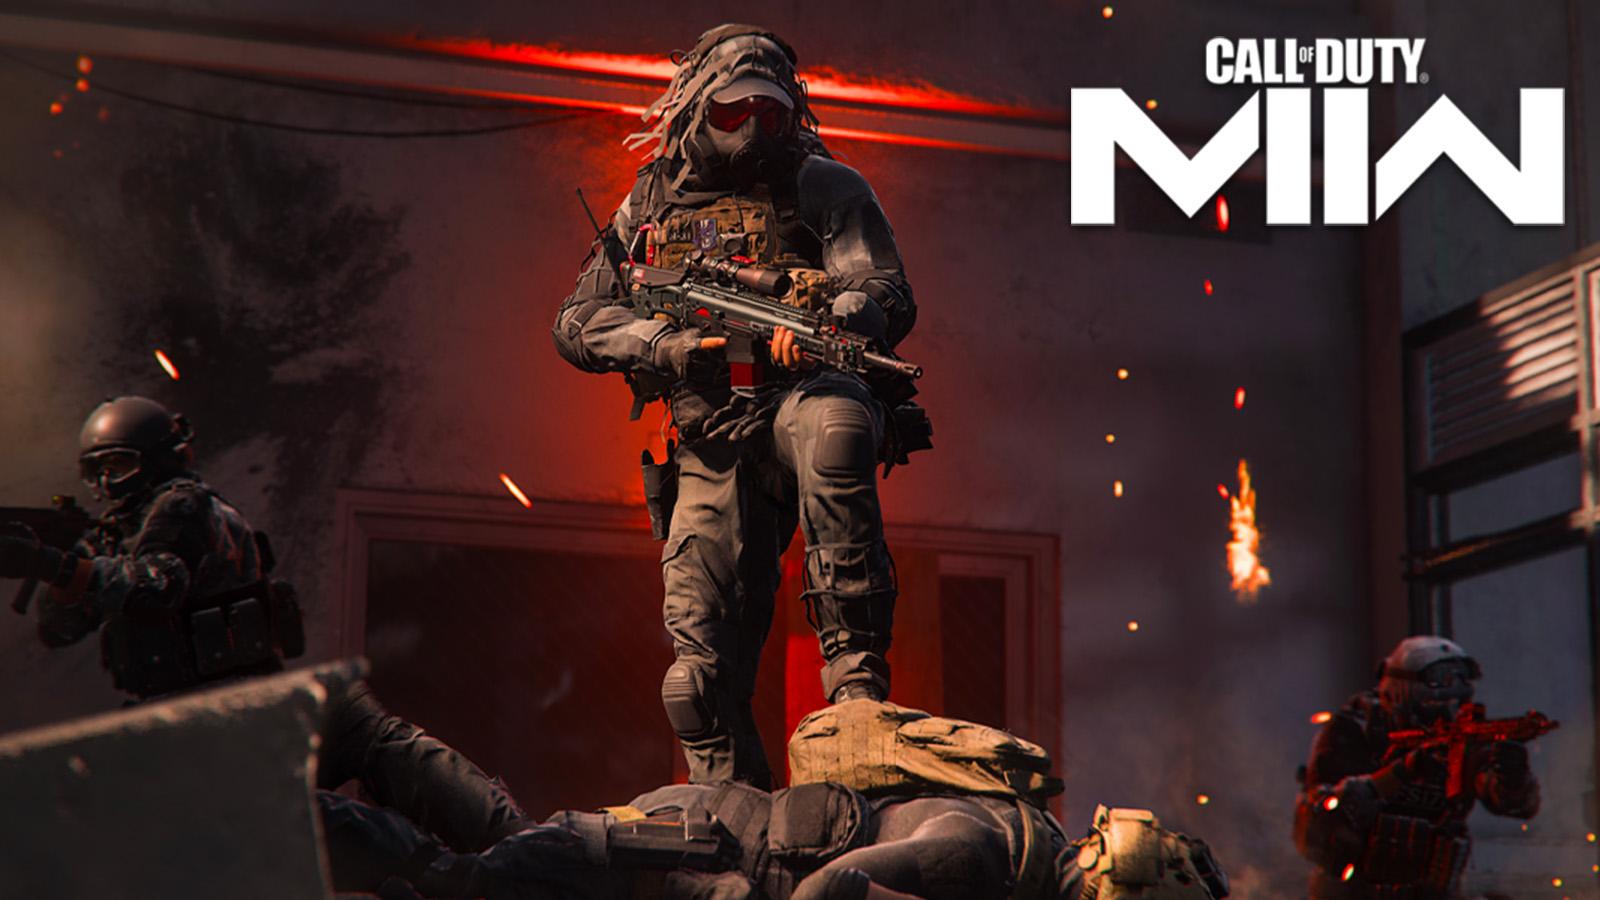 Fans' Biggest Fear About Call of Duty: Modern Warfare 3 Zombies Is